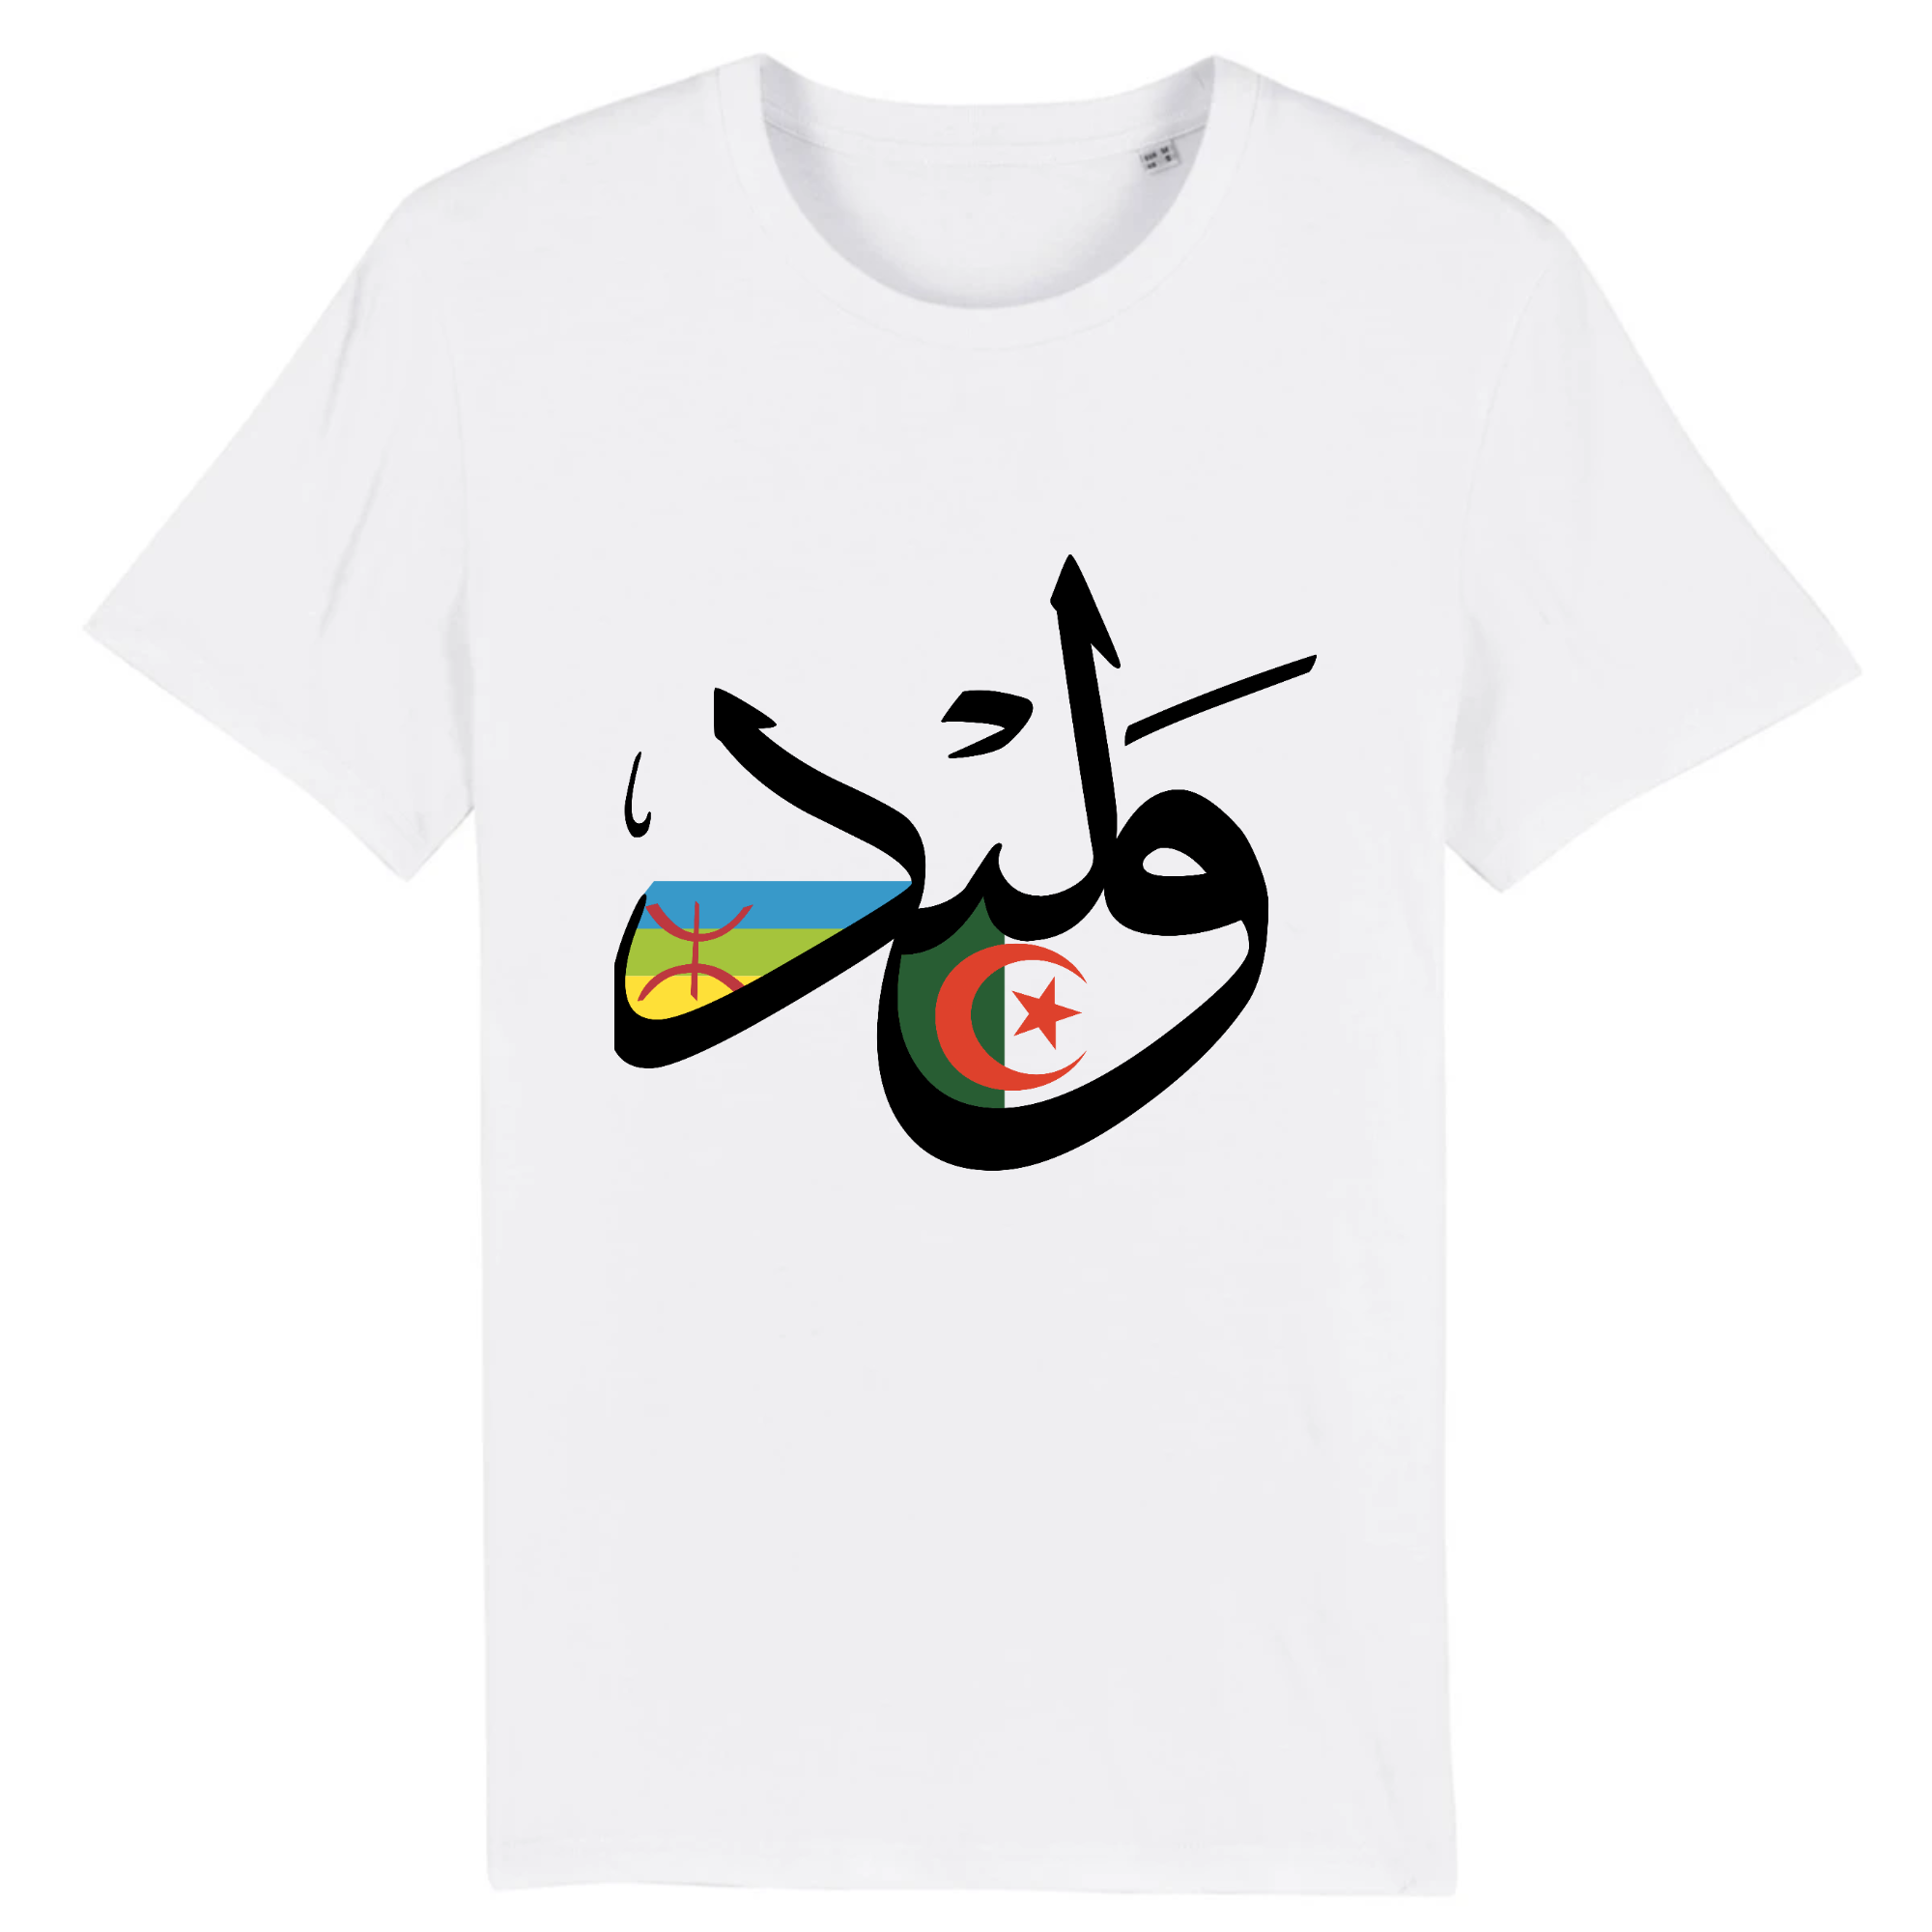 Walid - T-shirt Calligraphie Arabe